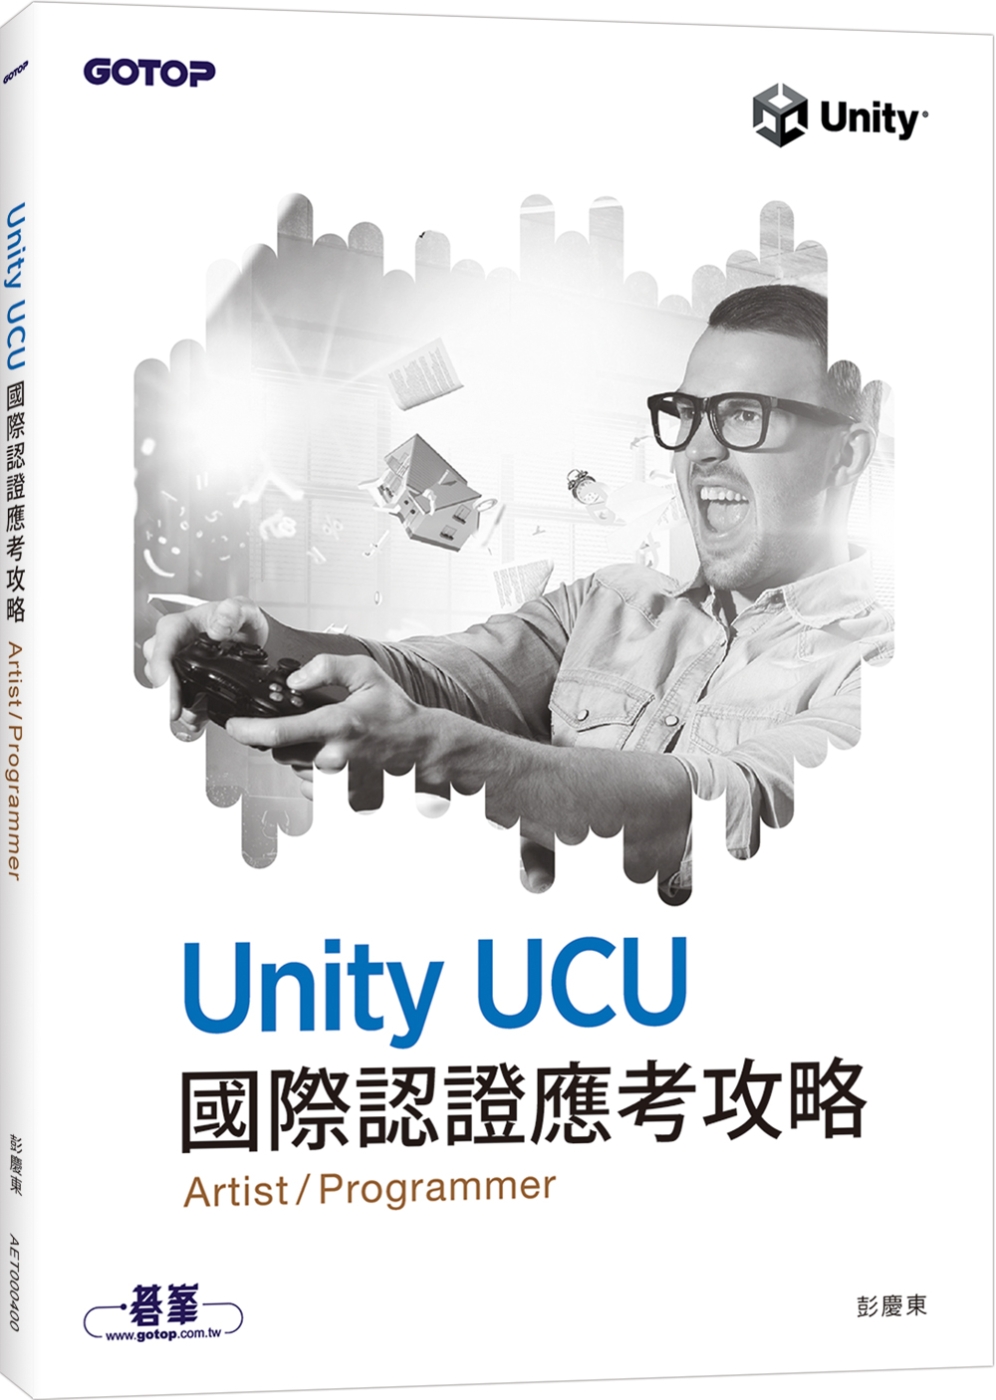 Unity UCU 國際認證應考攻略 (Artist/Programmer)